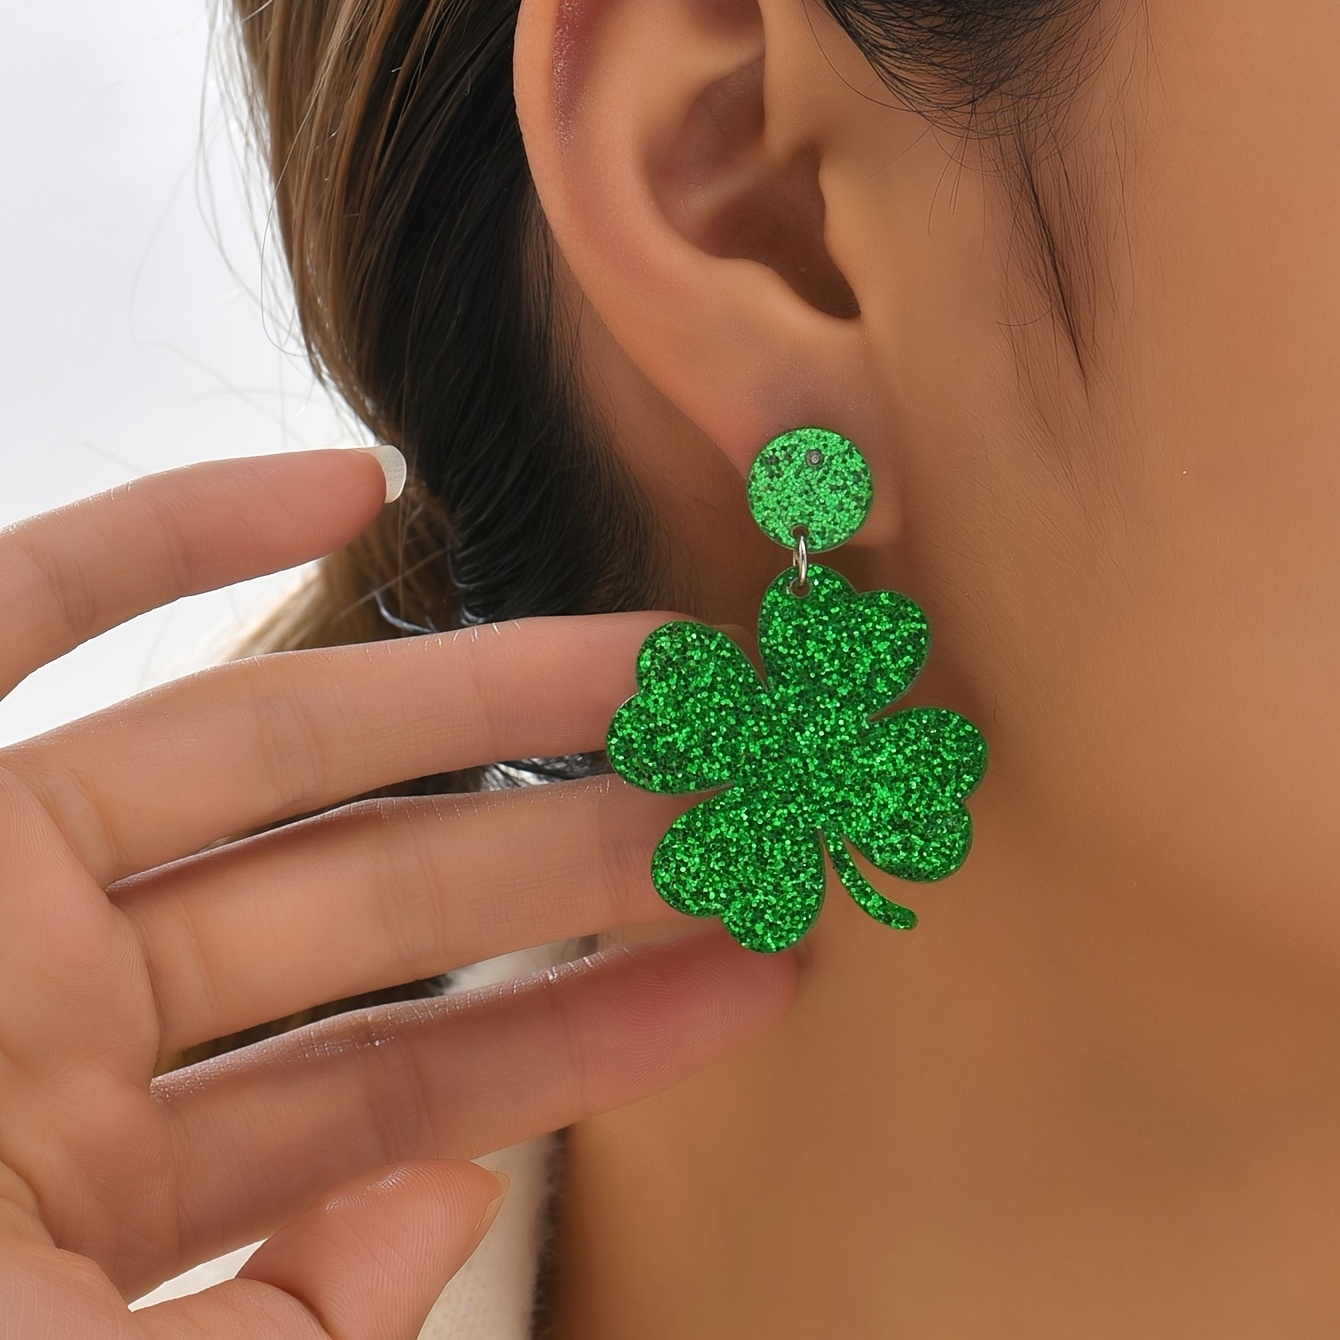  16 Pairs St. Patrick's Day Earrings for Women Shamrock